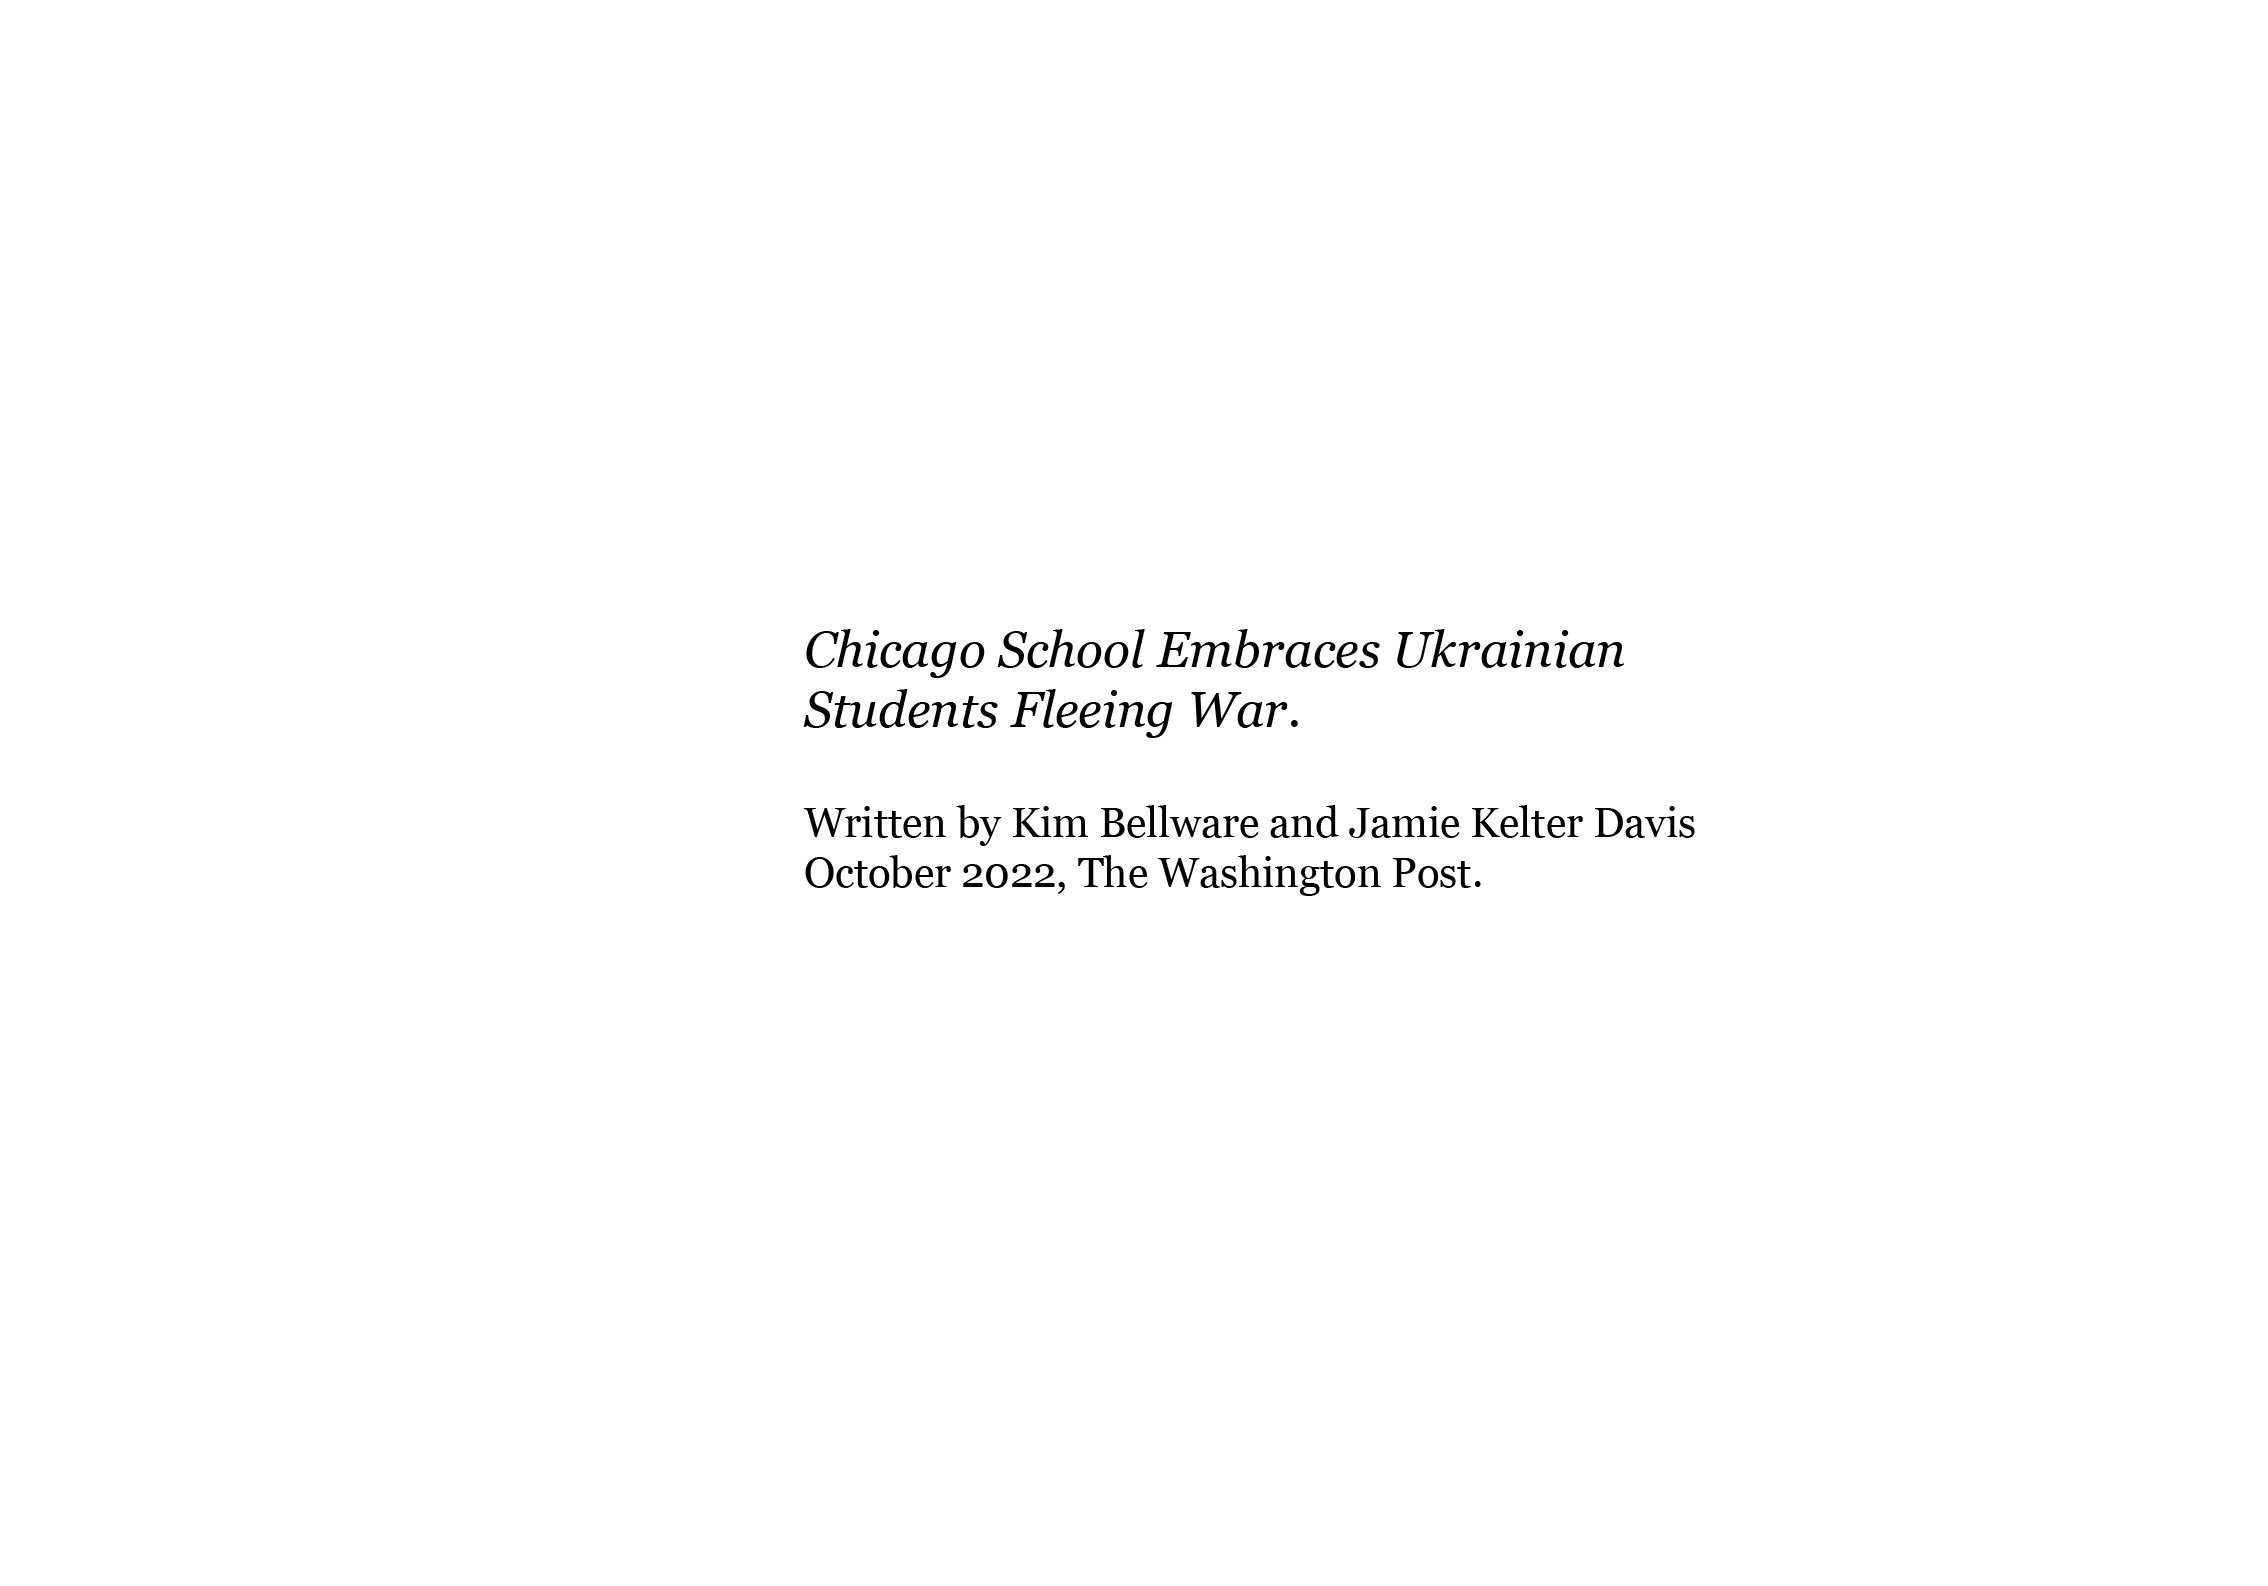  Chicago School Embraces Ukrainian Students  The Washington Post, 2022  